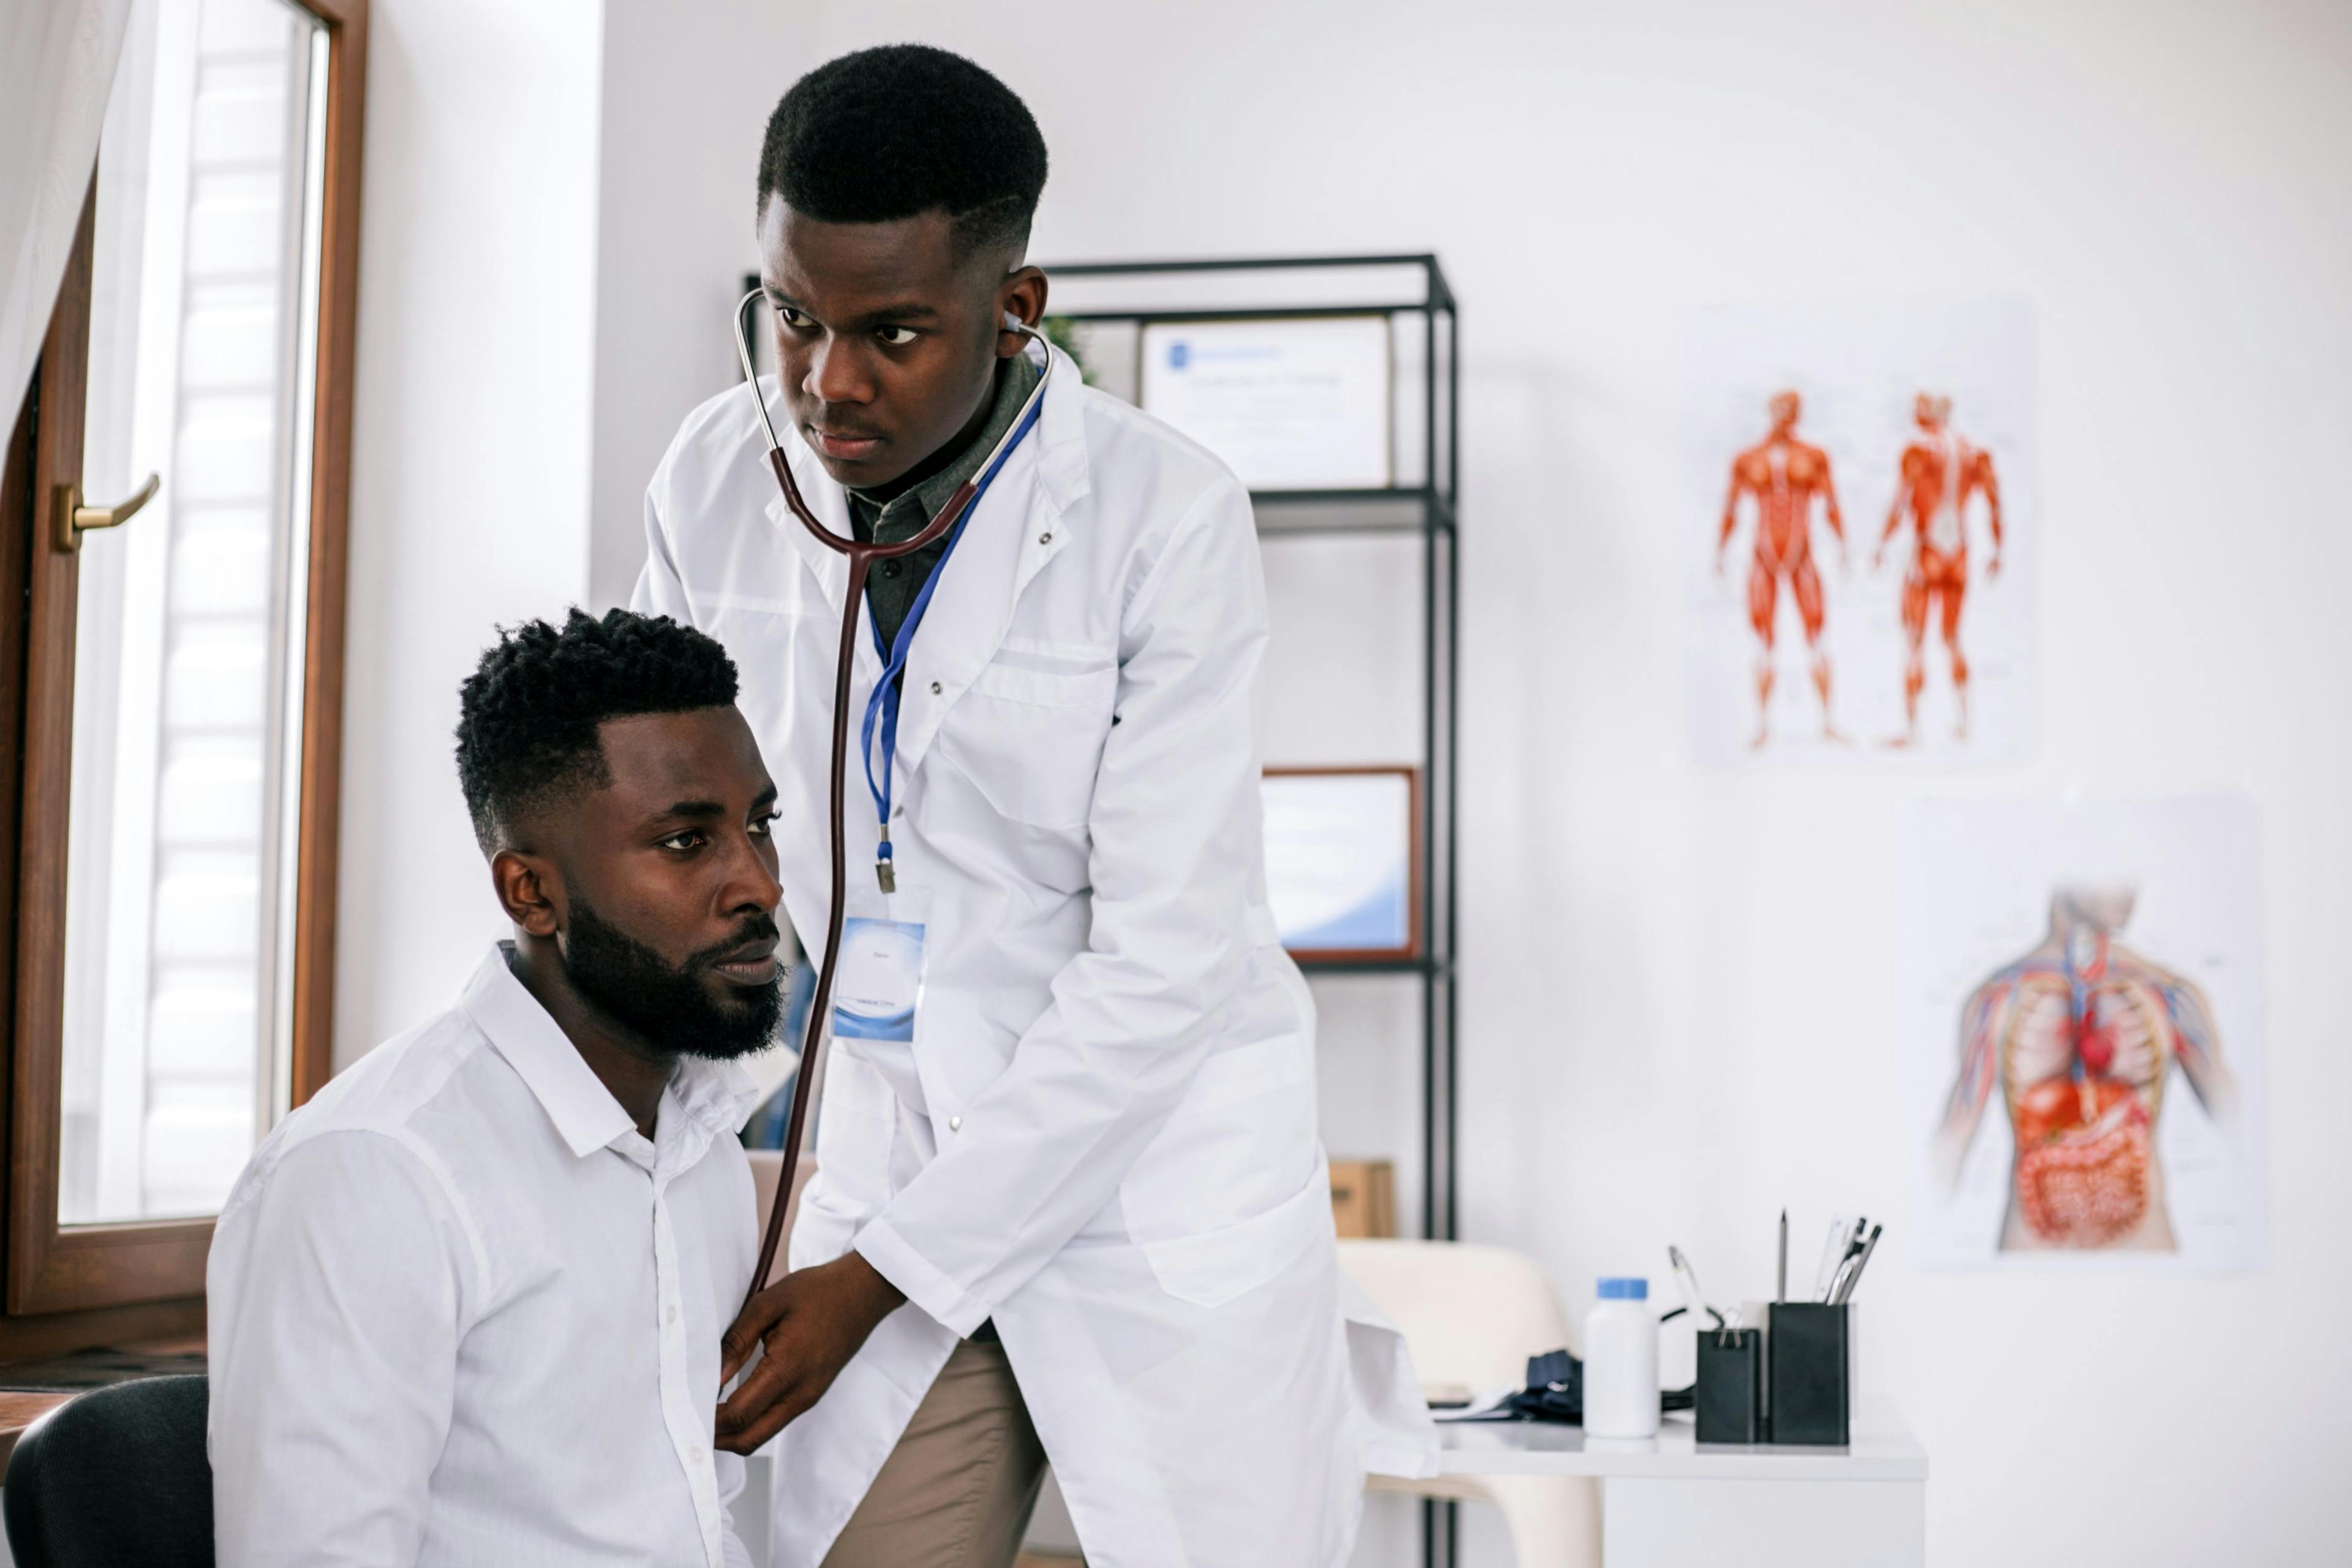 A Black doctor treats a Black patient